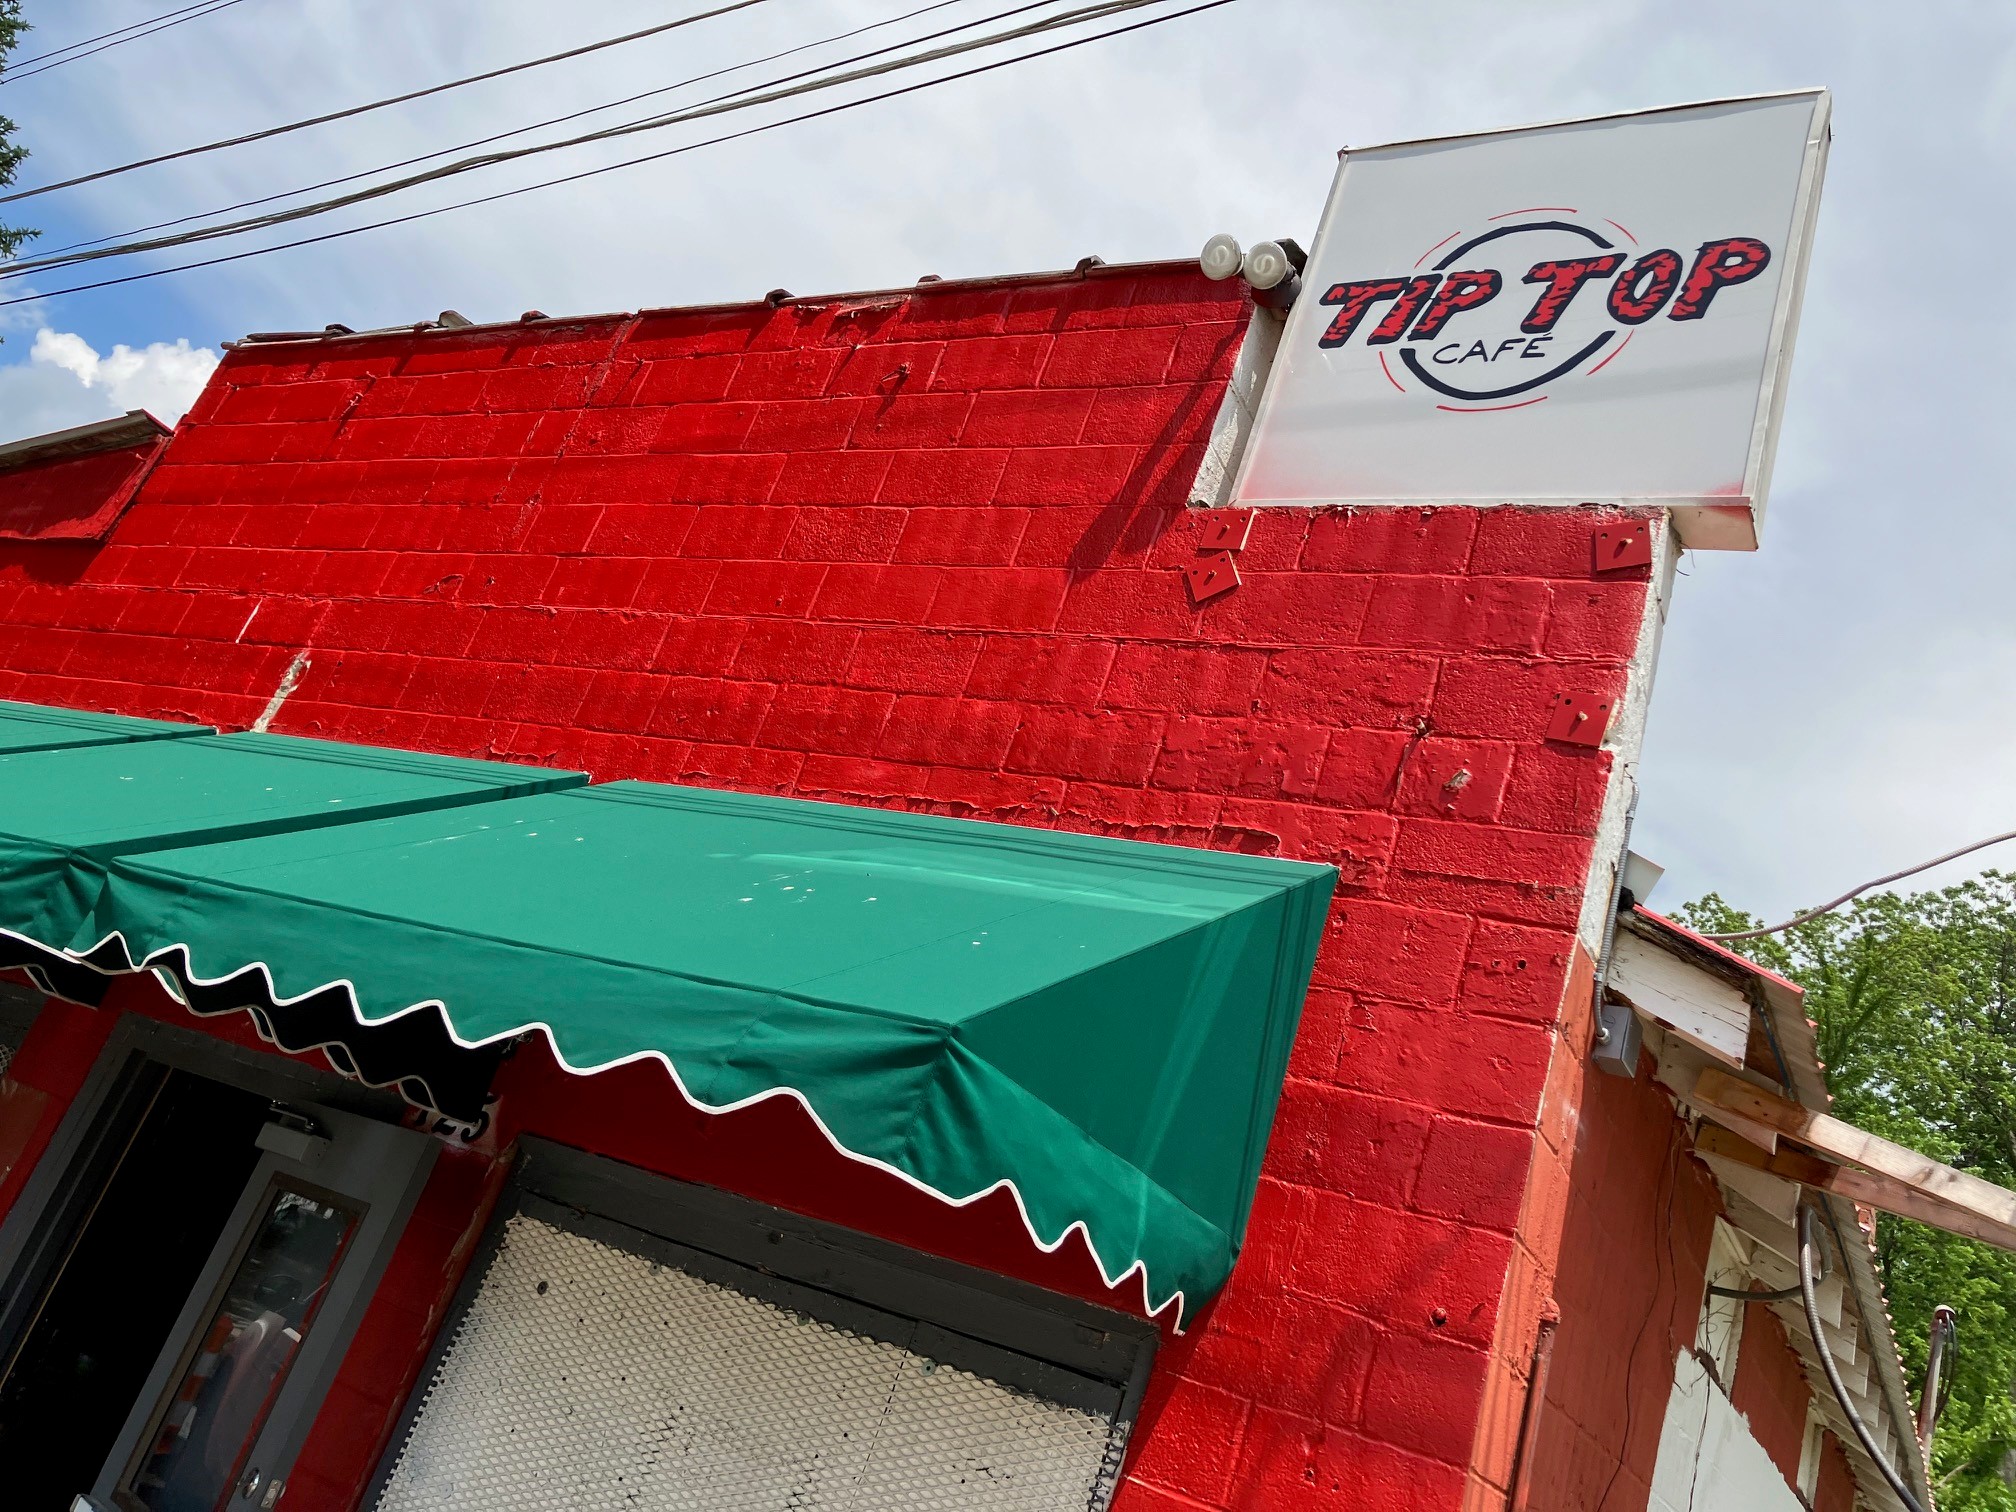 Tip Top Café: New update on reopening of iconic Huntsville bar al.com